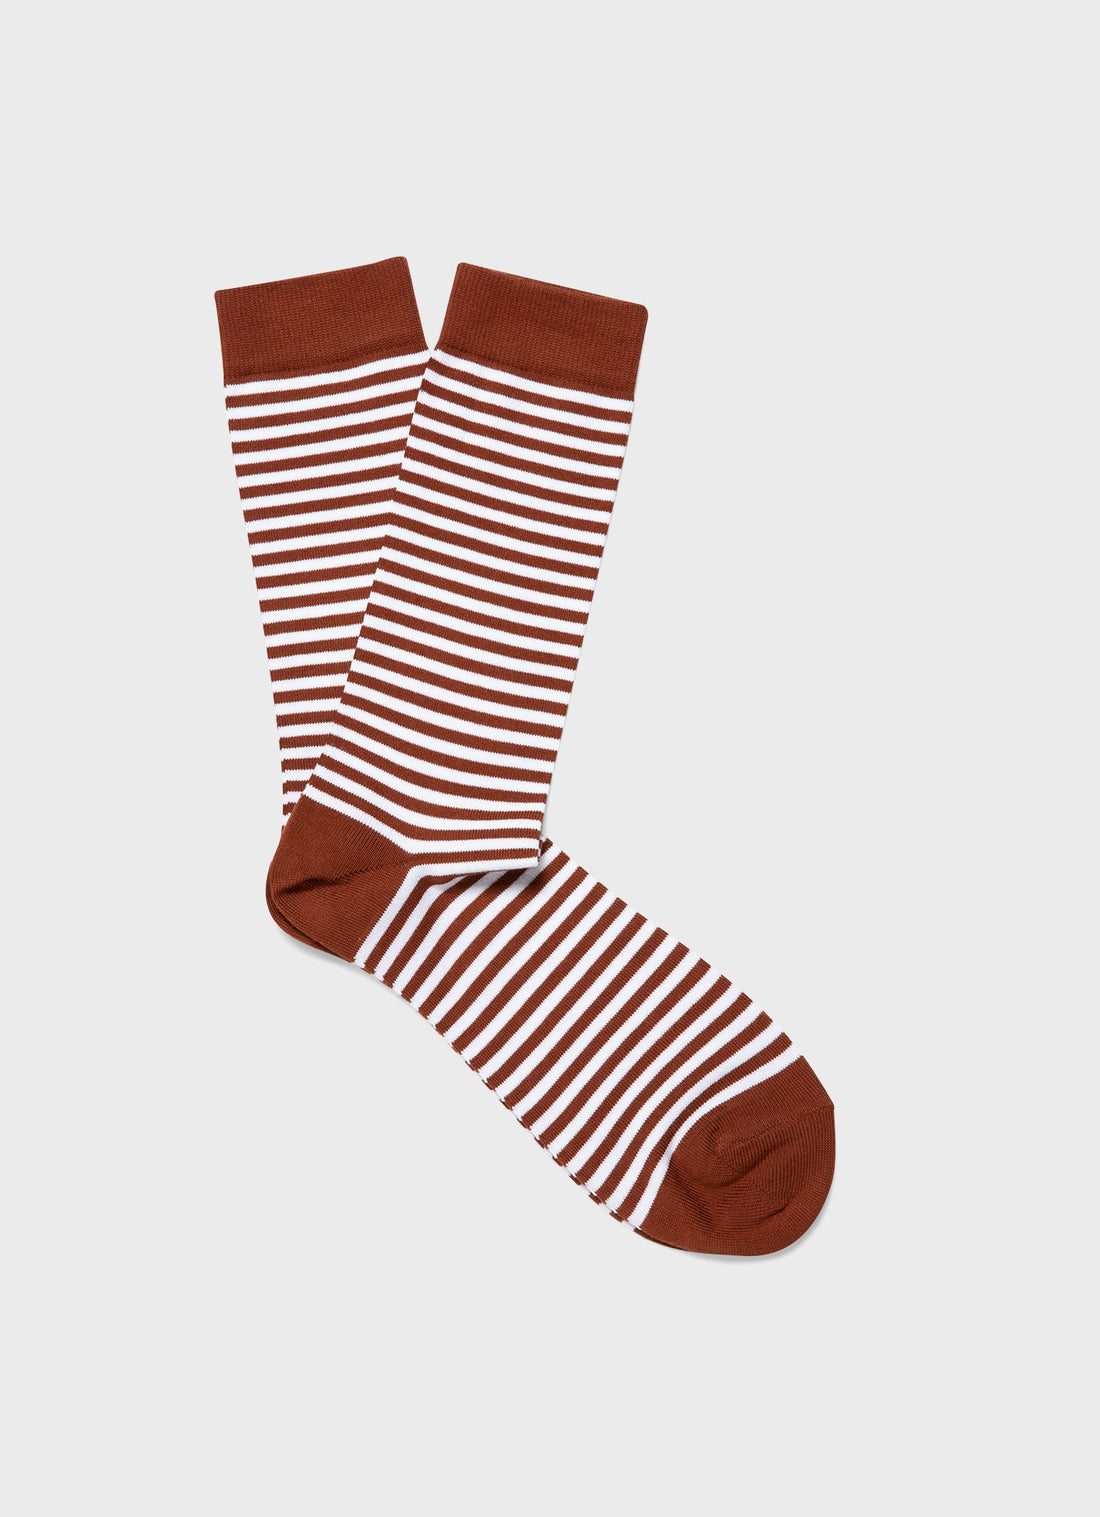 Men's Cotton Socks in White/Tobacco English Stripe